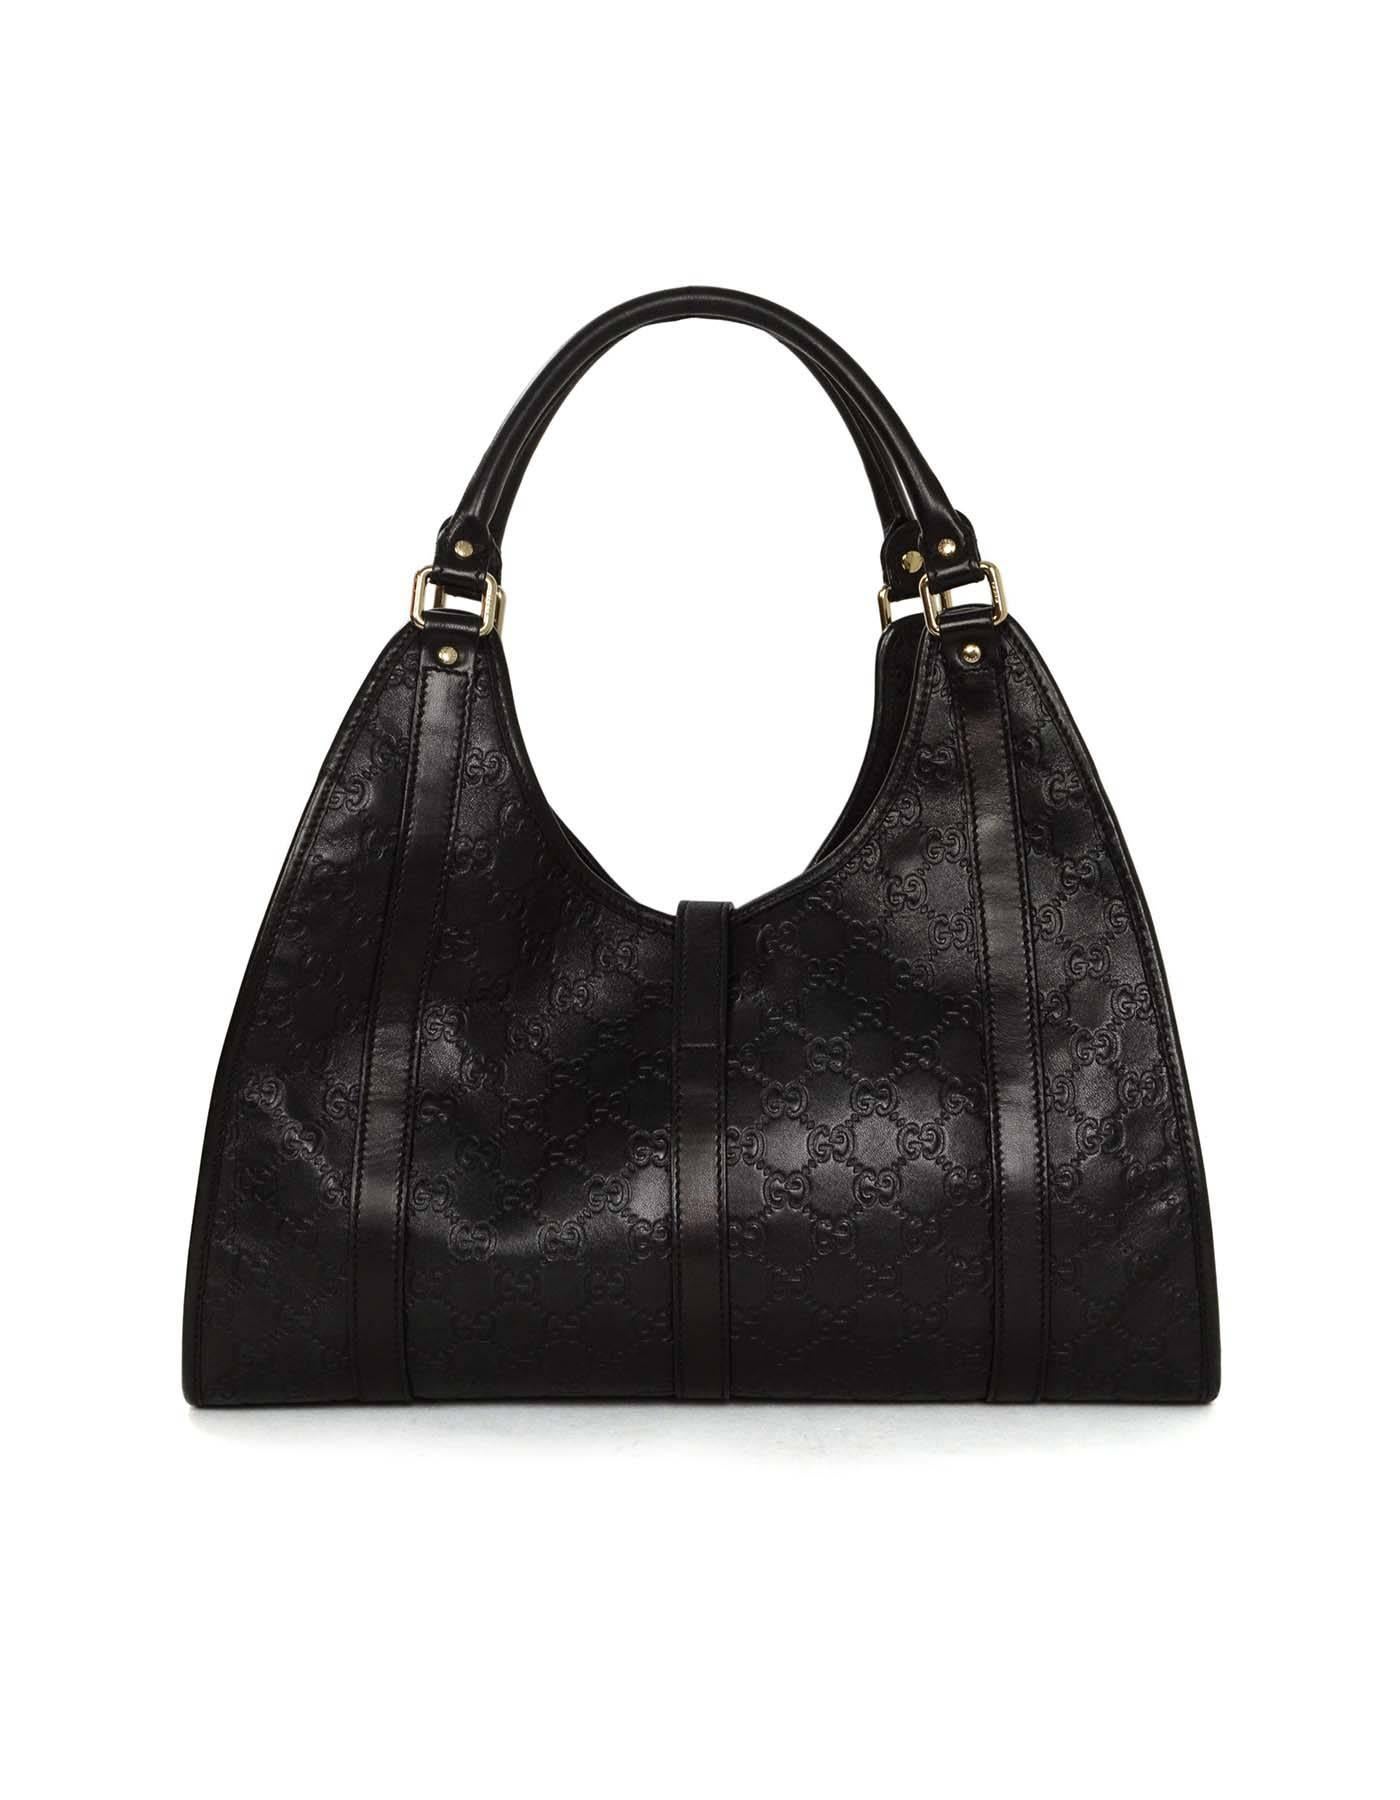 black guccissima leather handbag